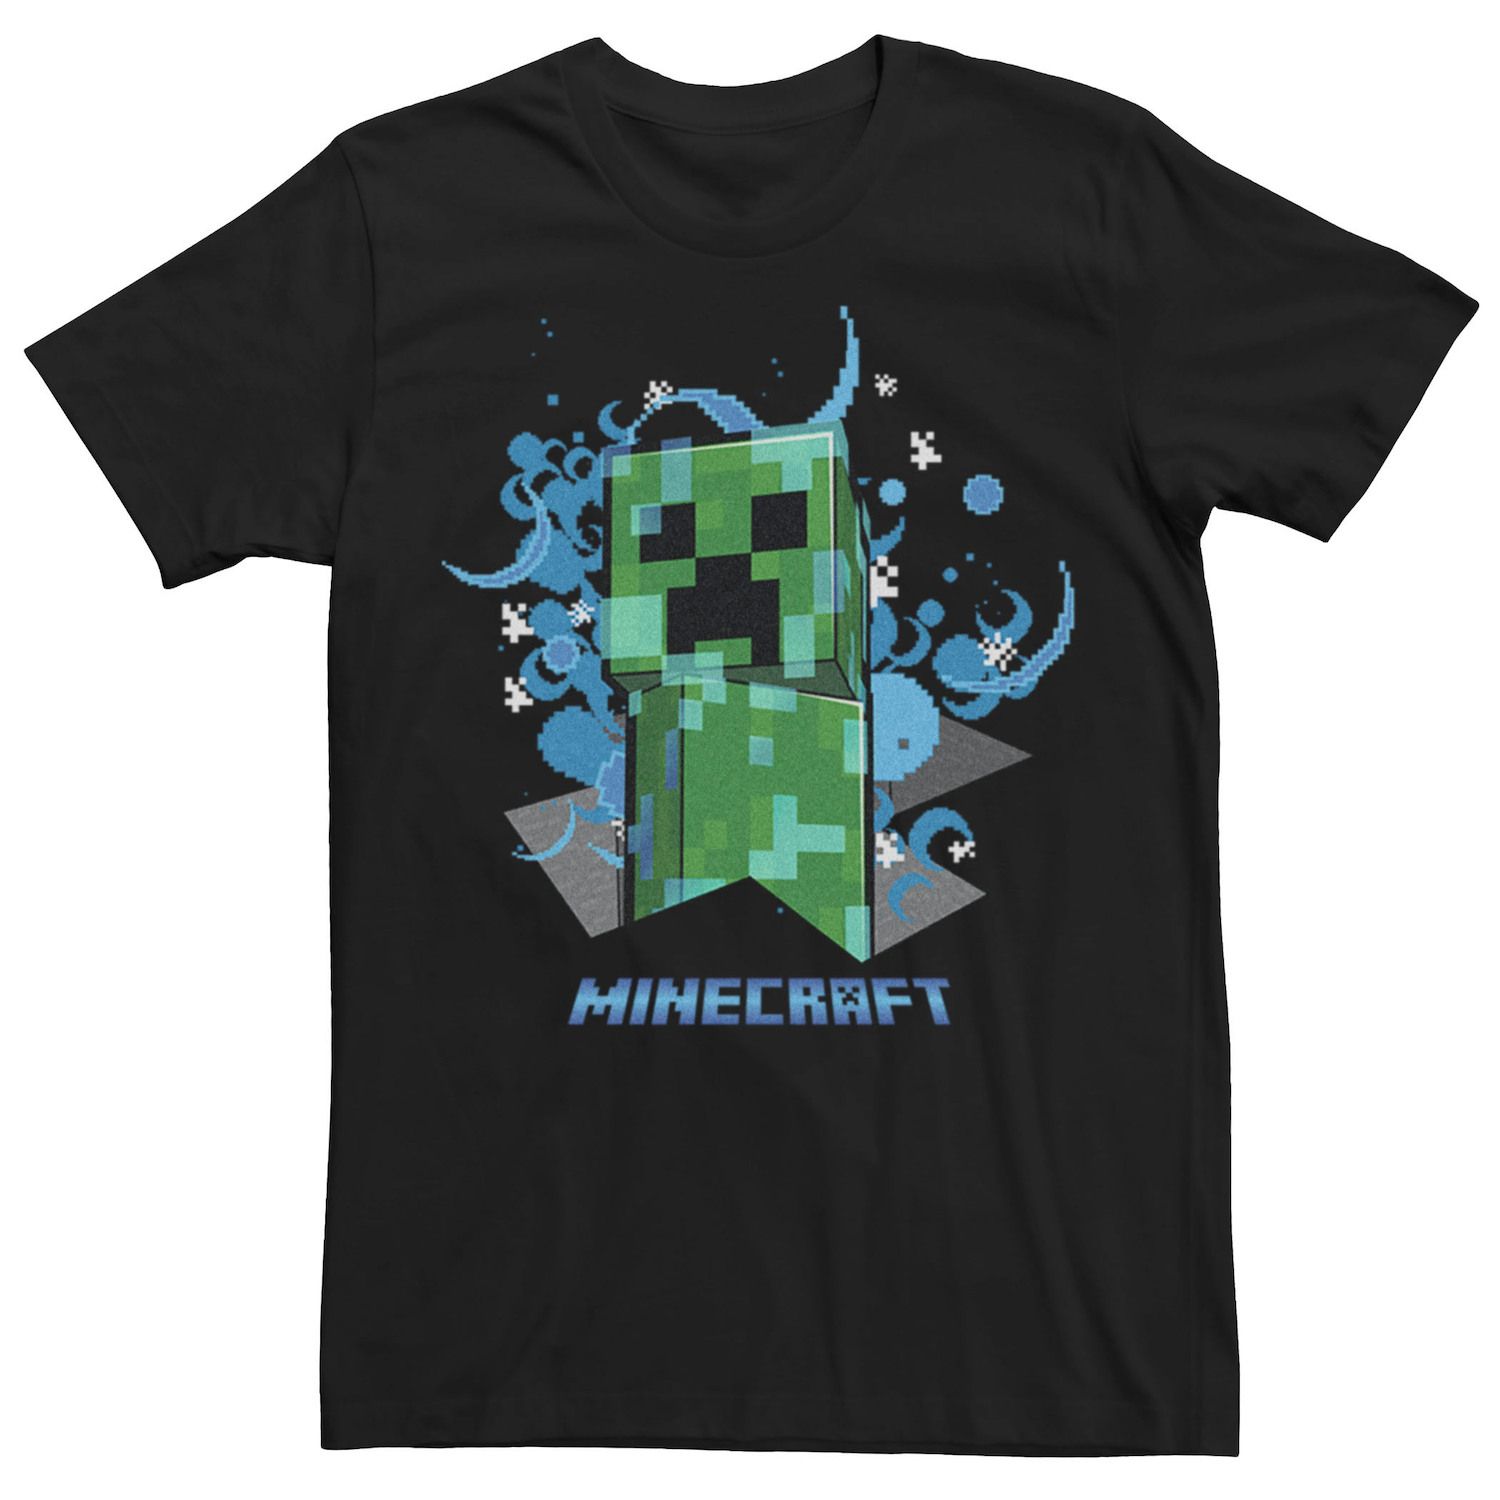 Мужская футболка с логотипом Minecraft Charged Electric Creeper Licensed Character светильник minecraft charged creeper icon